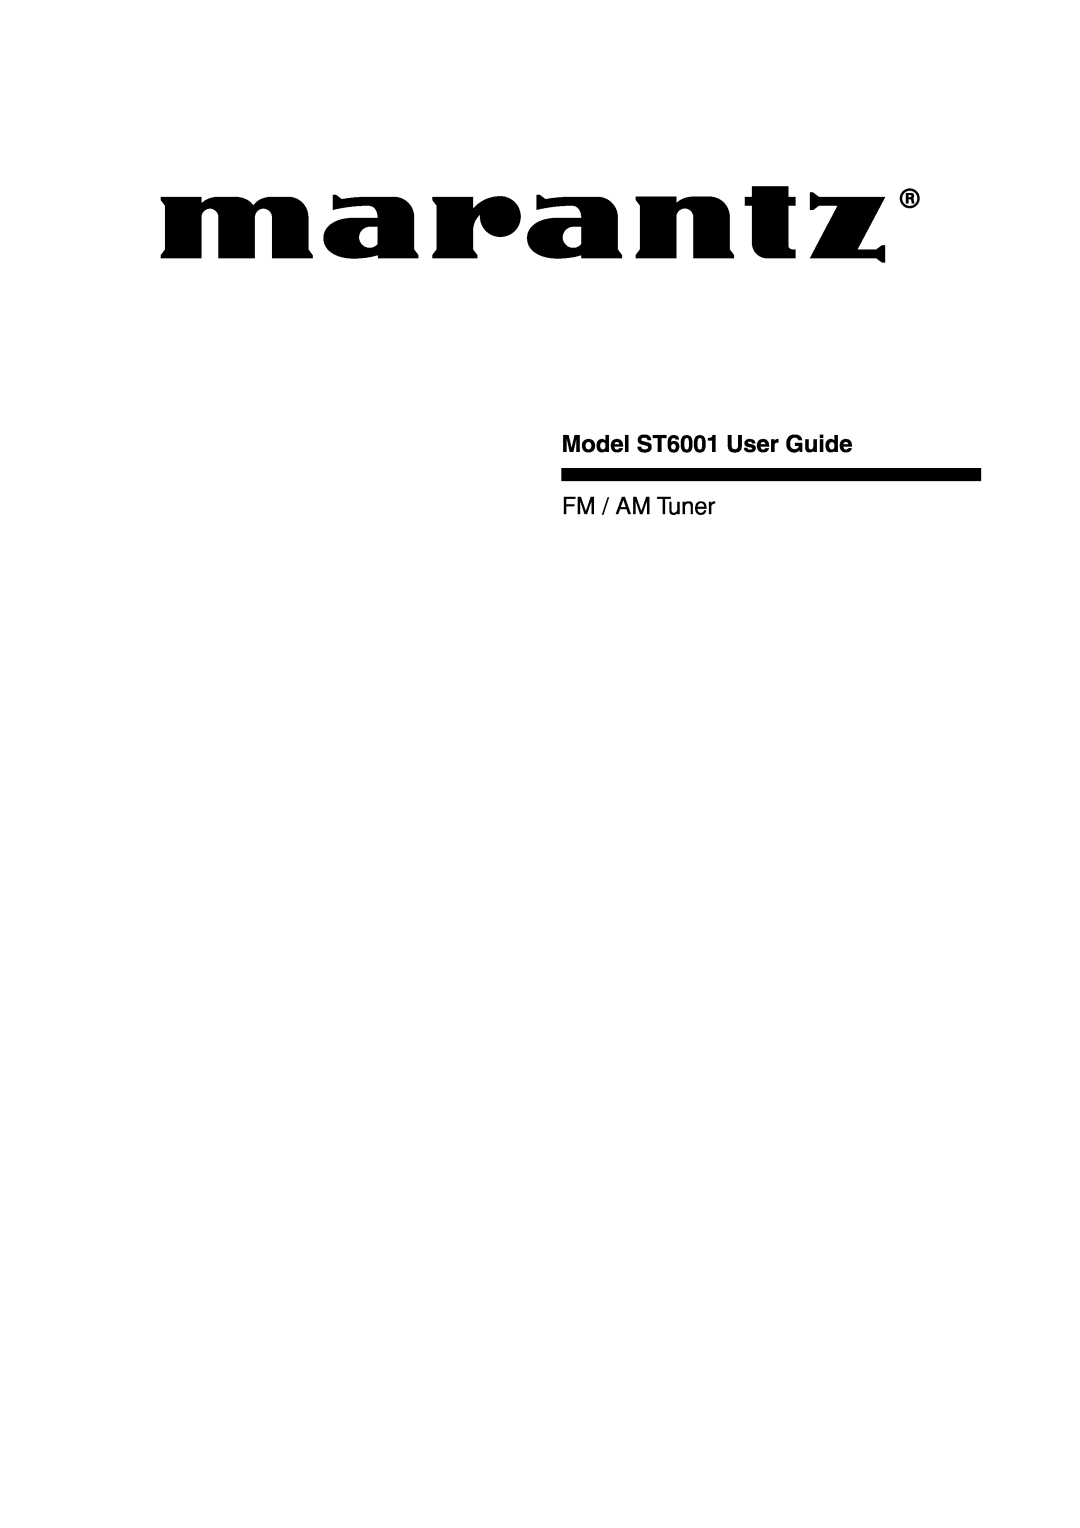 Marantz manual Model ST6001 User Guide, FM / AM Tuner 